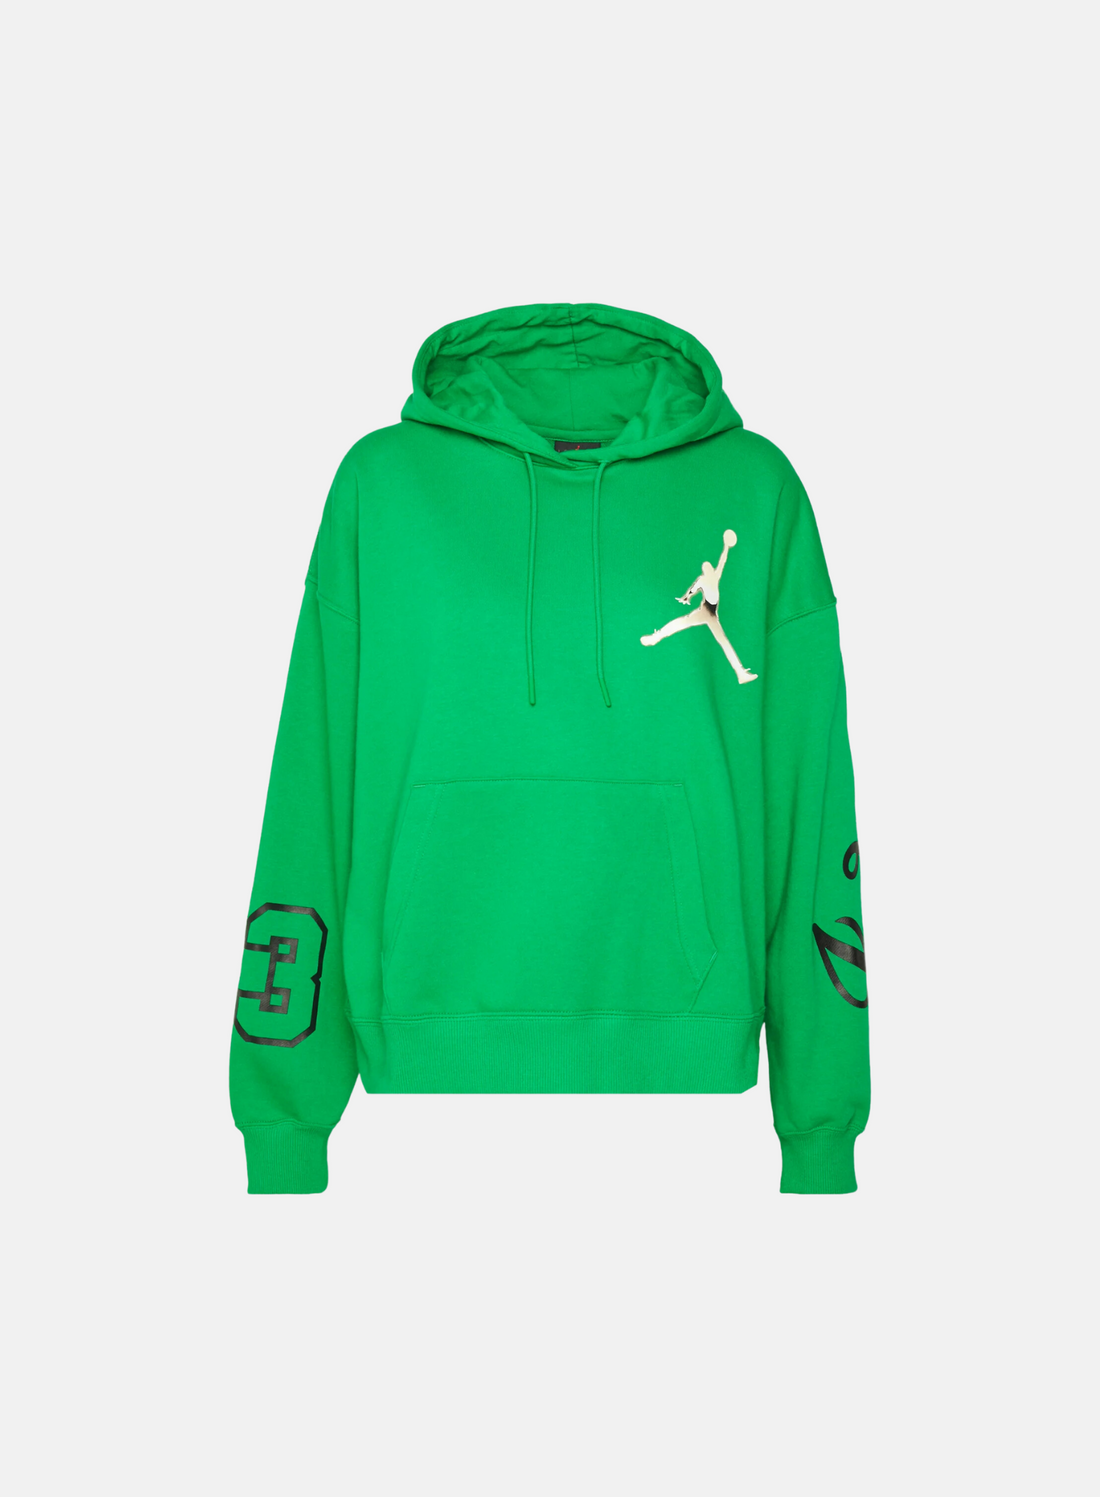 Nike Air Jordan Brooklyn Hoodie Green - Hympala Store 